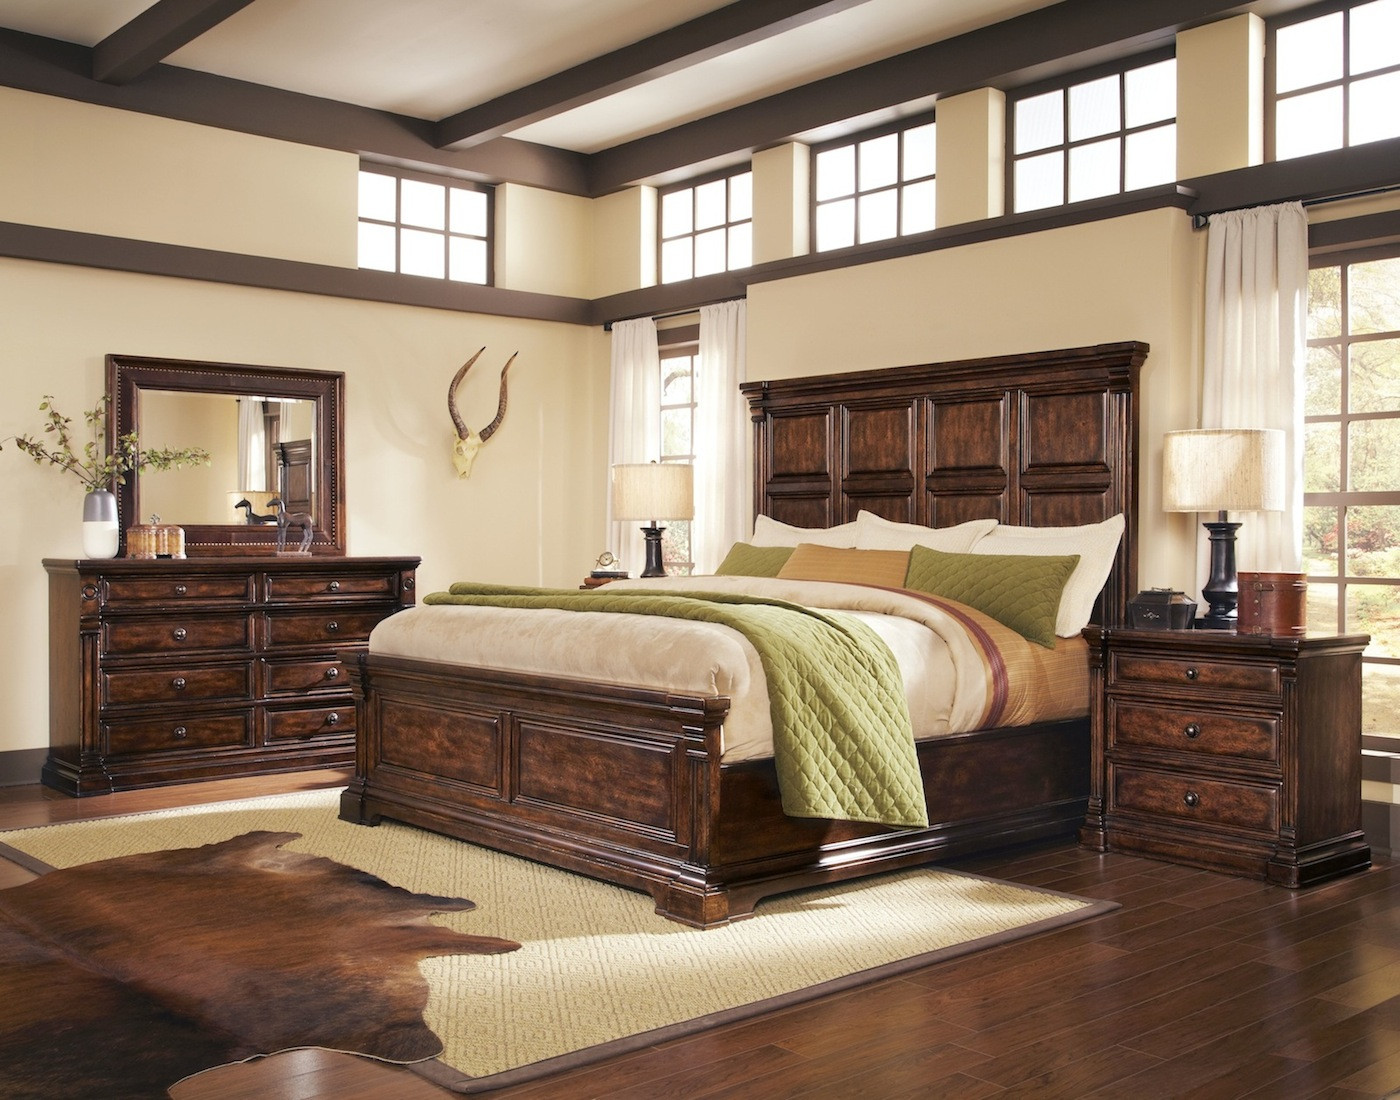 Rustic Bedroom Furniture
 Whiskey Oak Rustic Inspired Wooden Panel Bedroom Set